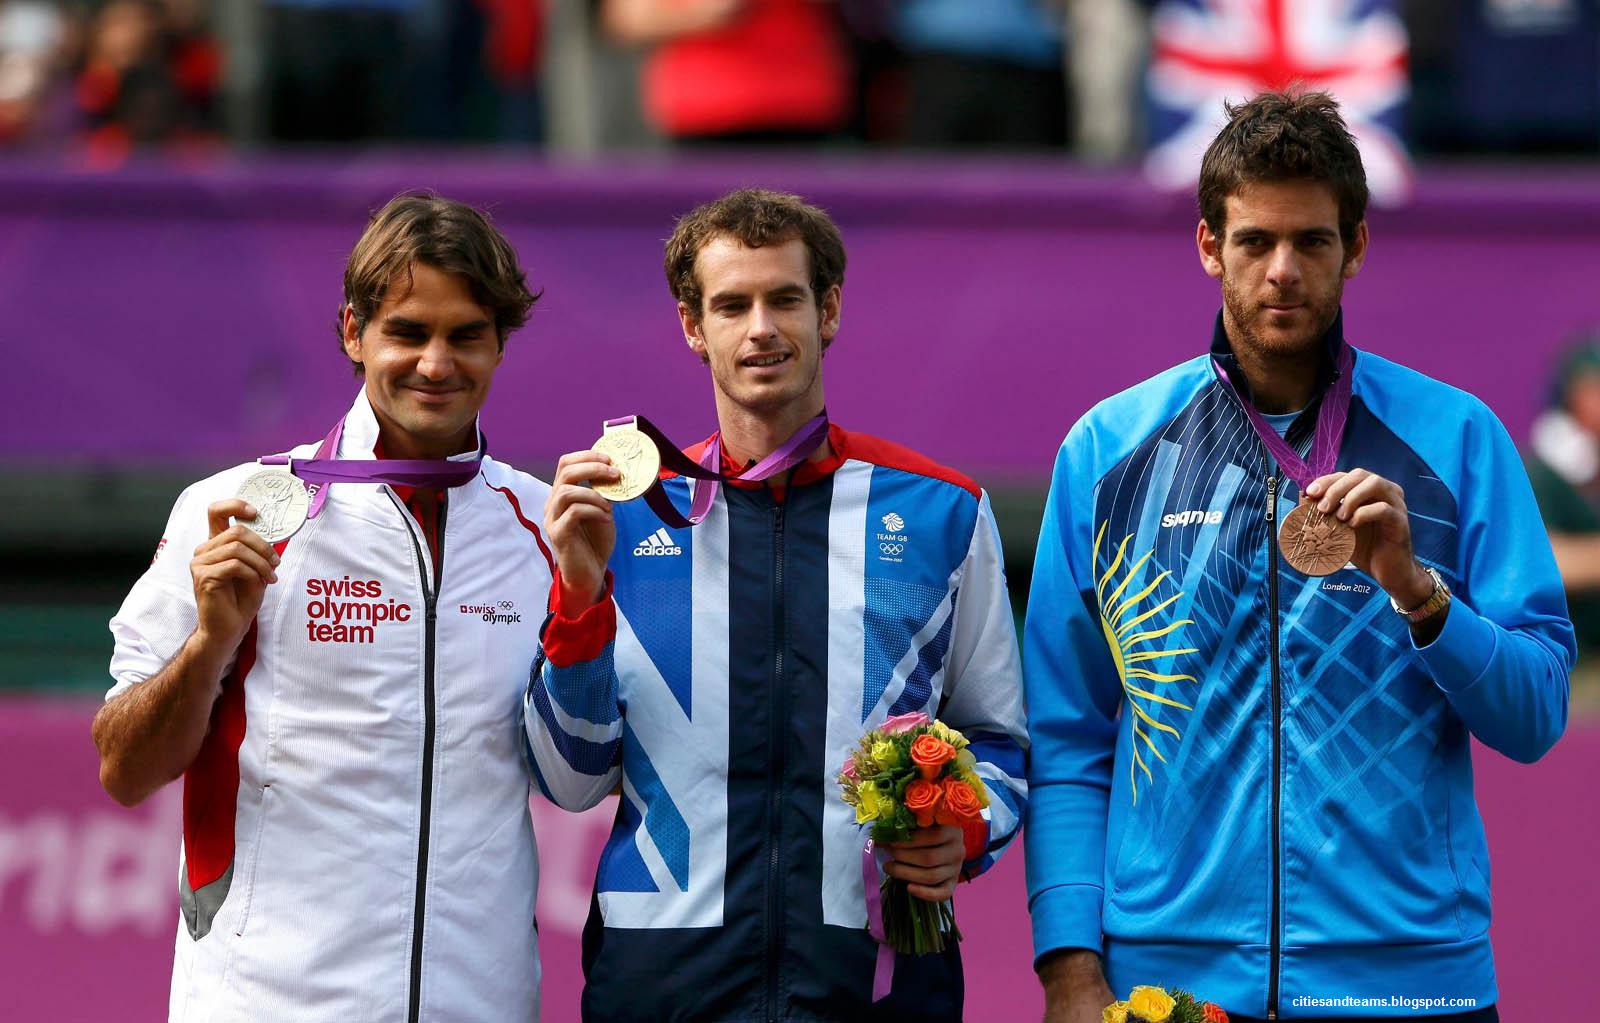 http://3.bp.blogspot.com/-tHVX10AbQSI/UCBTcL4Ia6I/AAAAAAAAHS0/L_xQ7hFQAqY/s1600/Andy_Murray_Roger_Federer_Juan_Martin_del_Potro_London_2012_Olympic_Games_Tennis_Medalists_Hd_Wallpaper_citiesandteams.blogspot.com.jpg